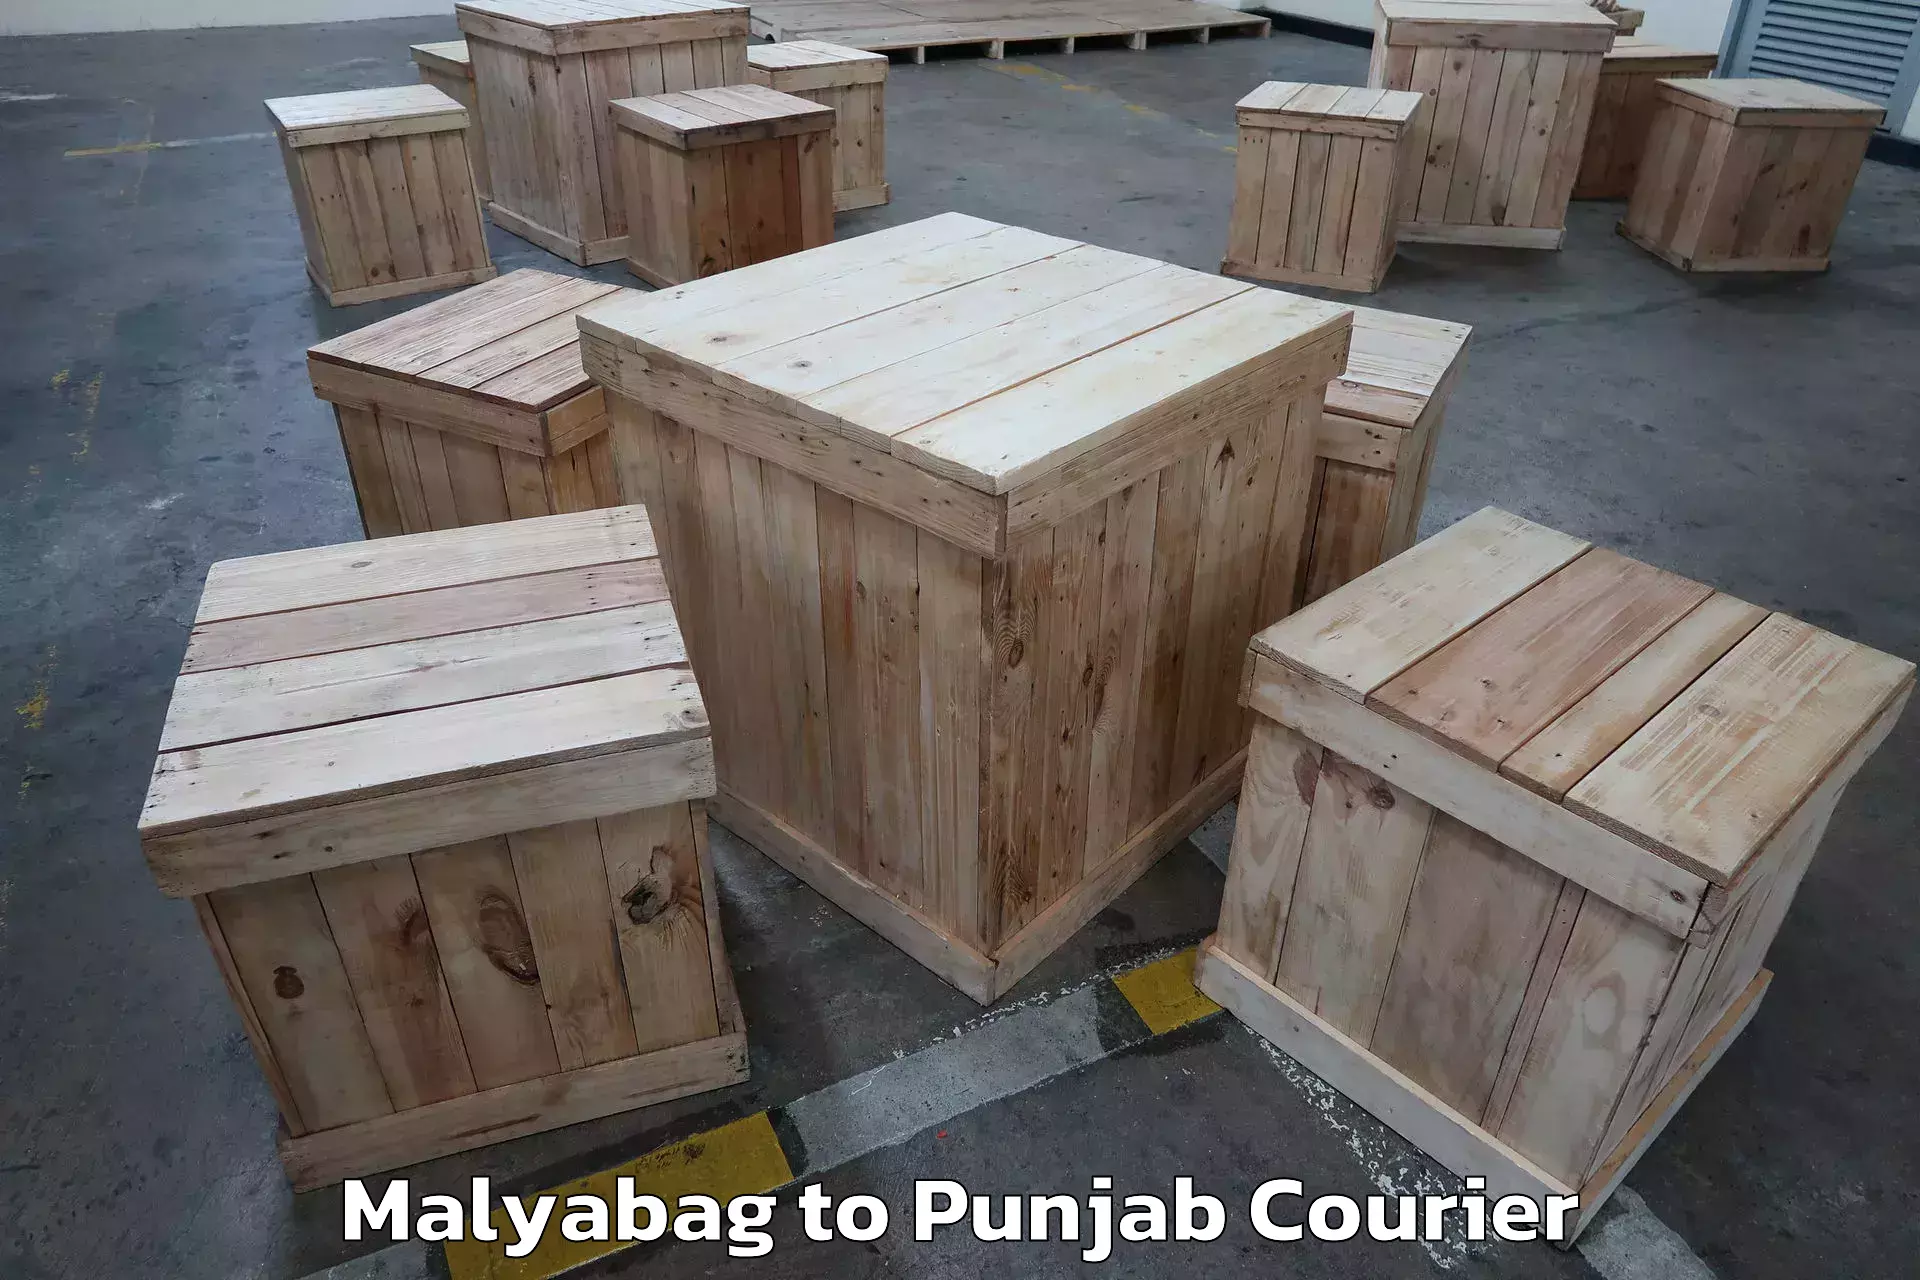 Furniture relocation experts Malyabag to Amritsar